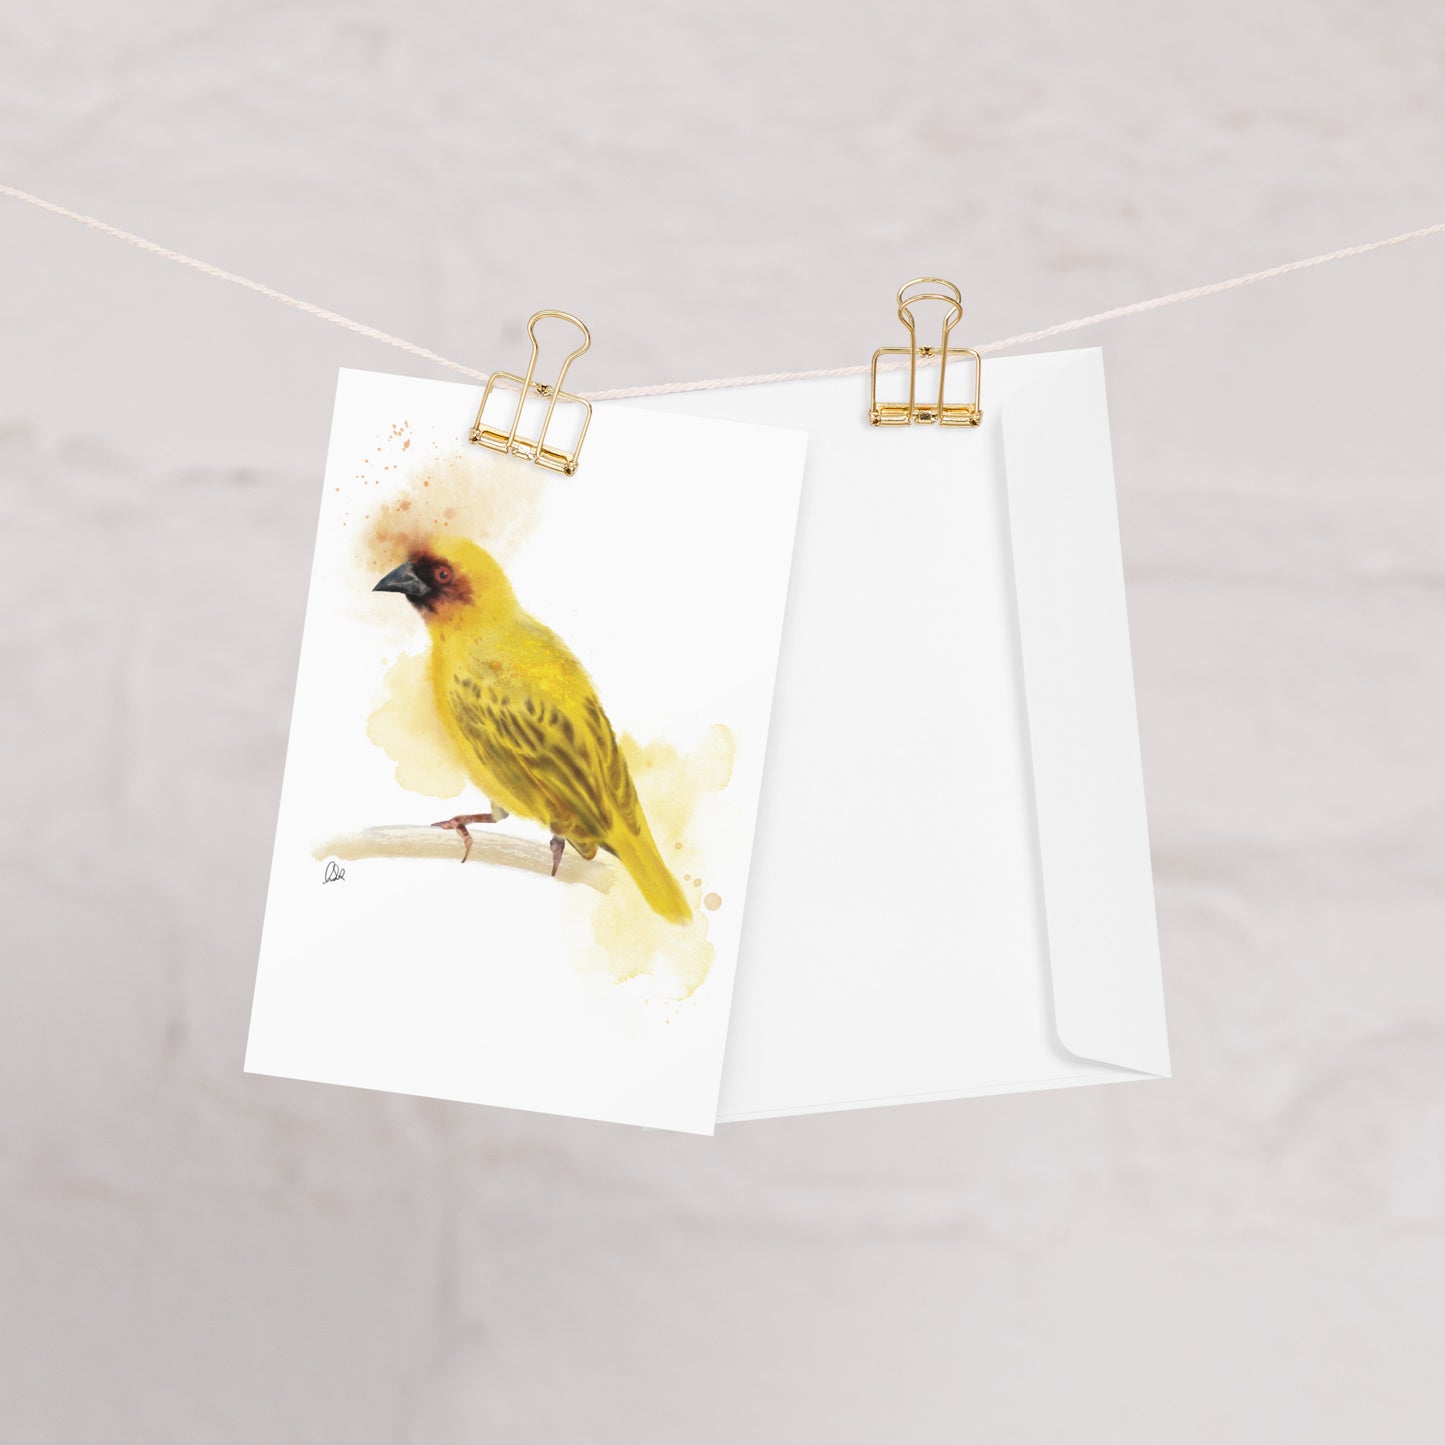 Ruppell's Weaver Bird Greeting card